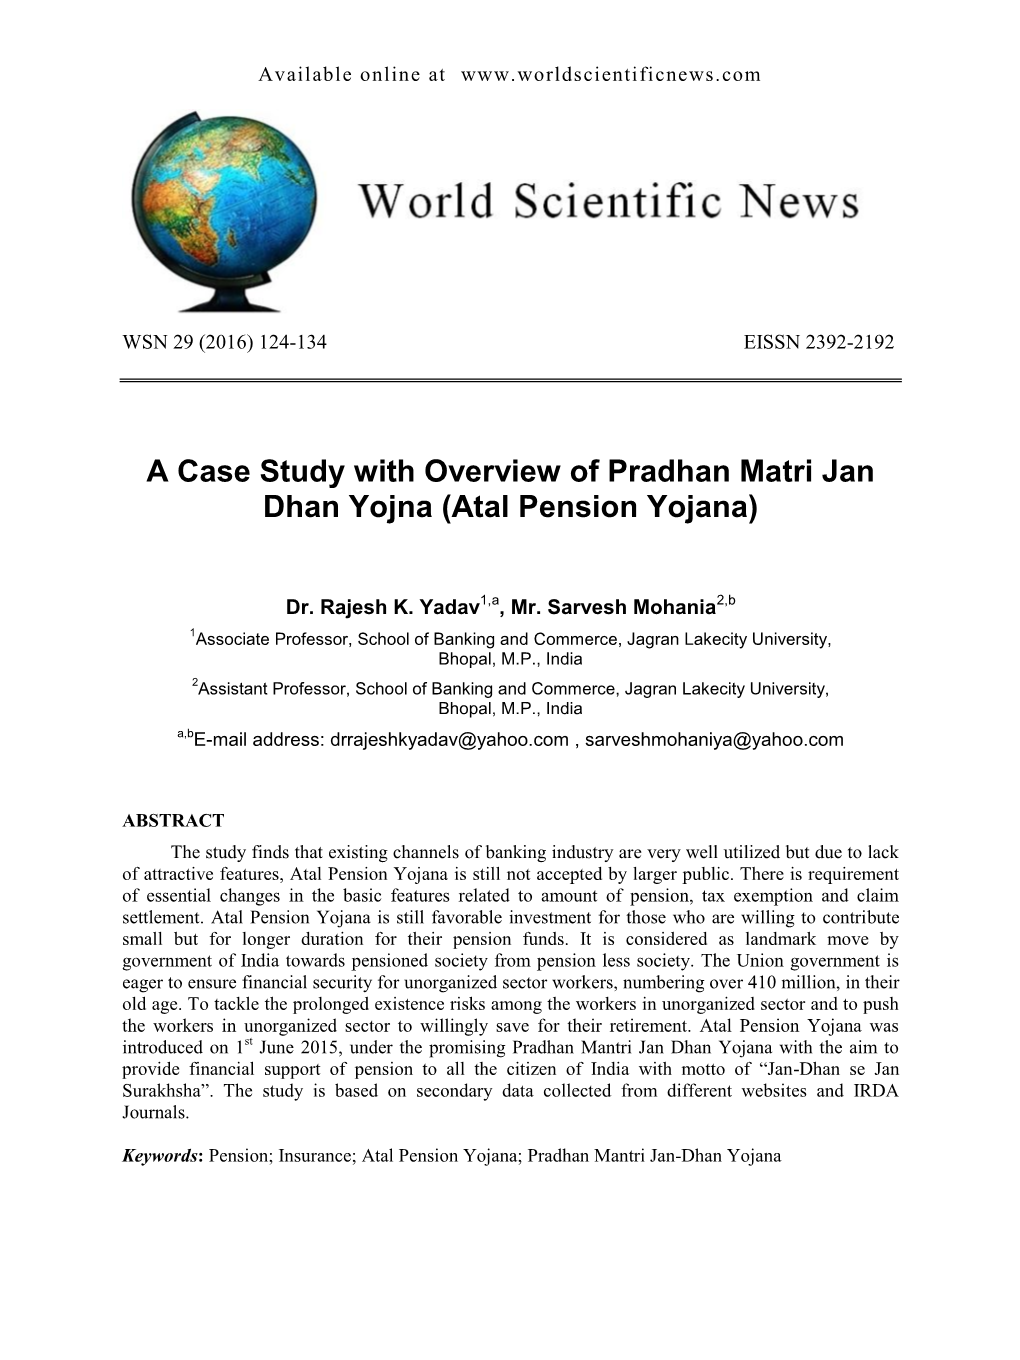 A Case Study with Overview of Pradhan Matri Jan Dhan Yojna (Atal Pension Yojana)